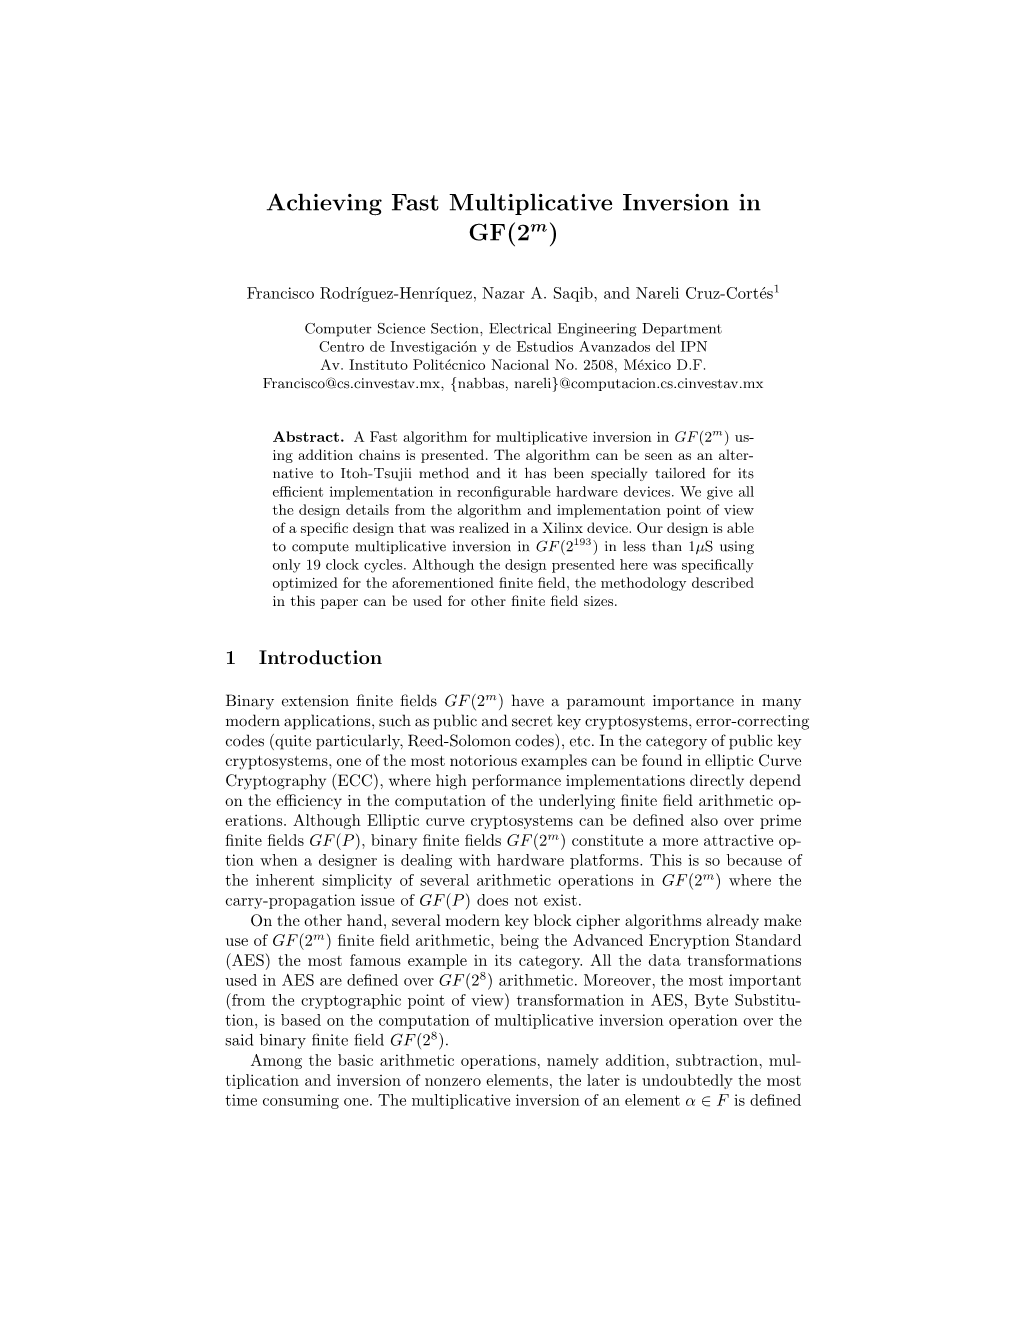 Achieving Fast Multiplicative Inversion in GF(2 )